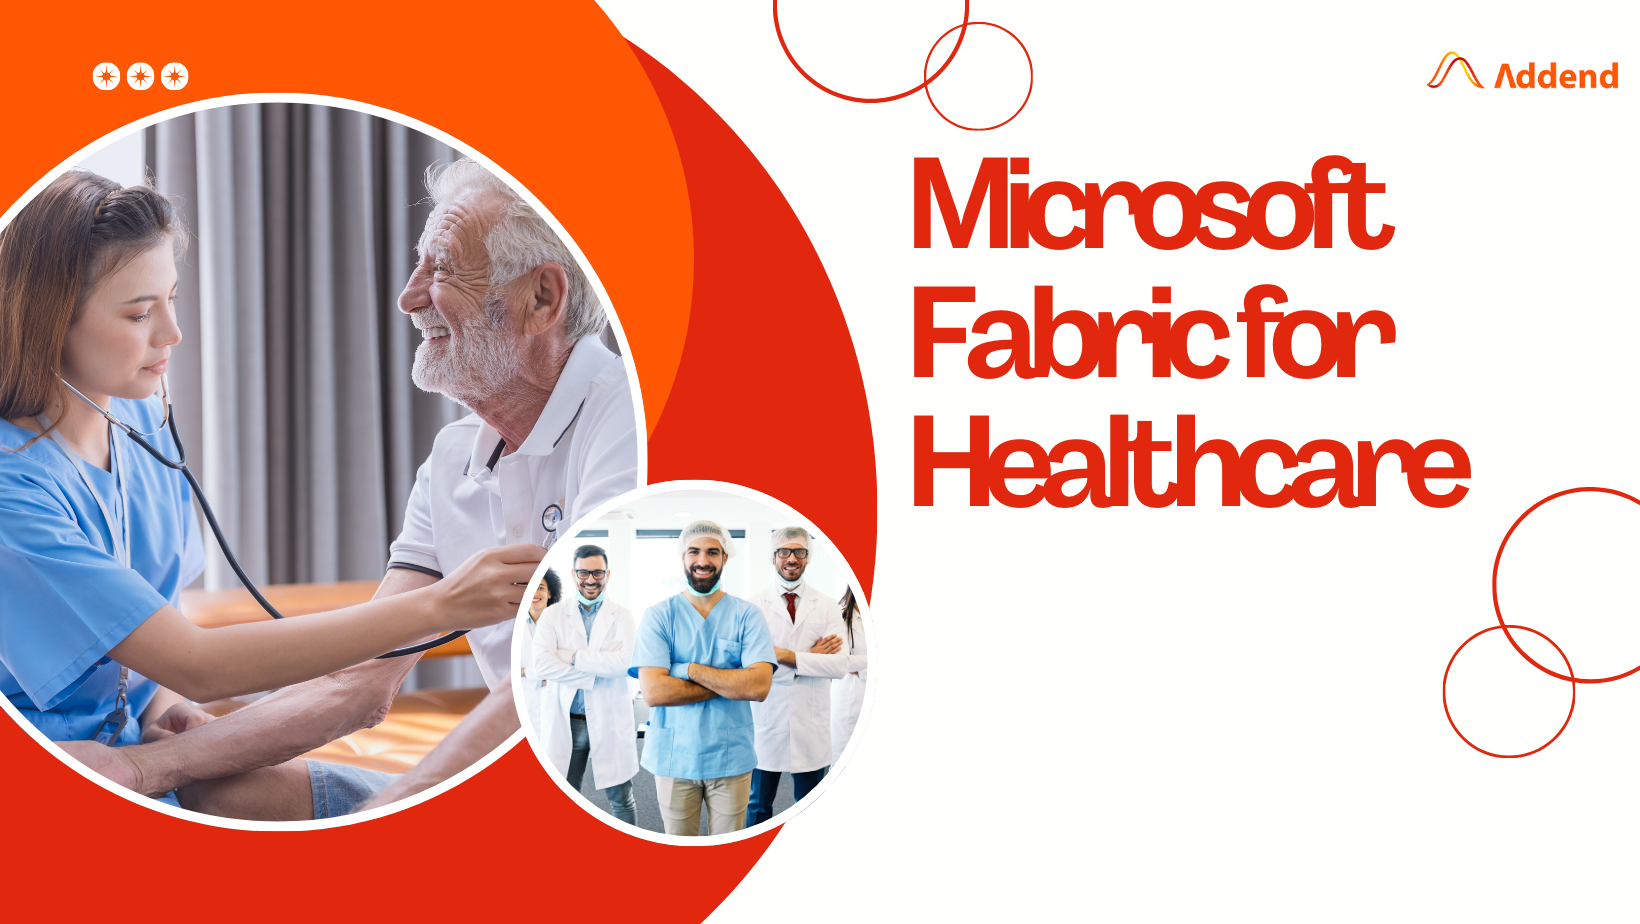 microsoft fabric for healthcare